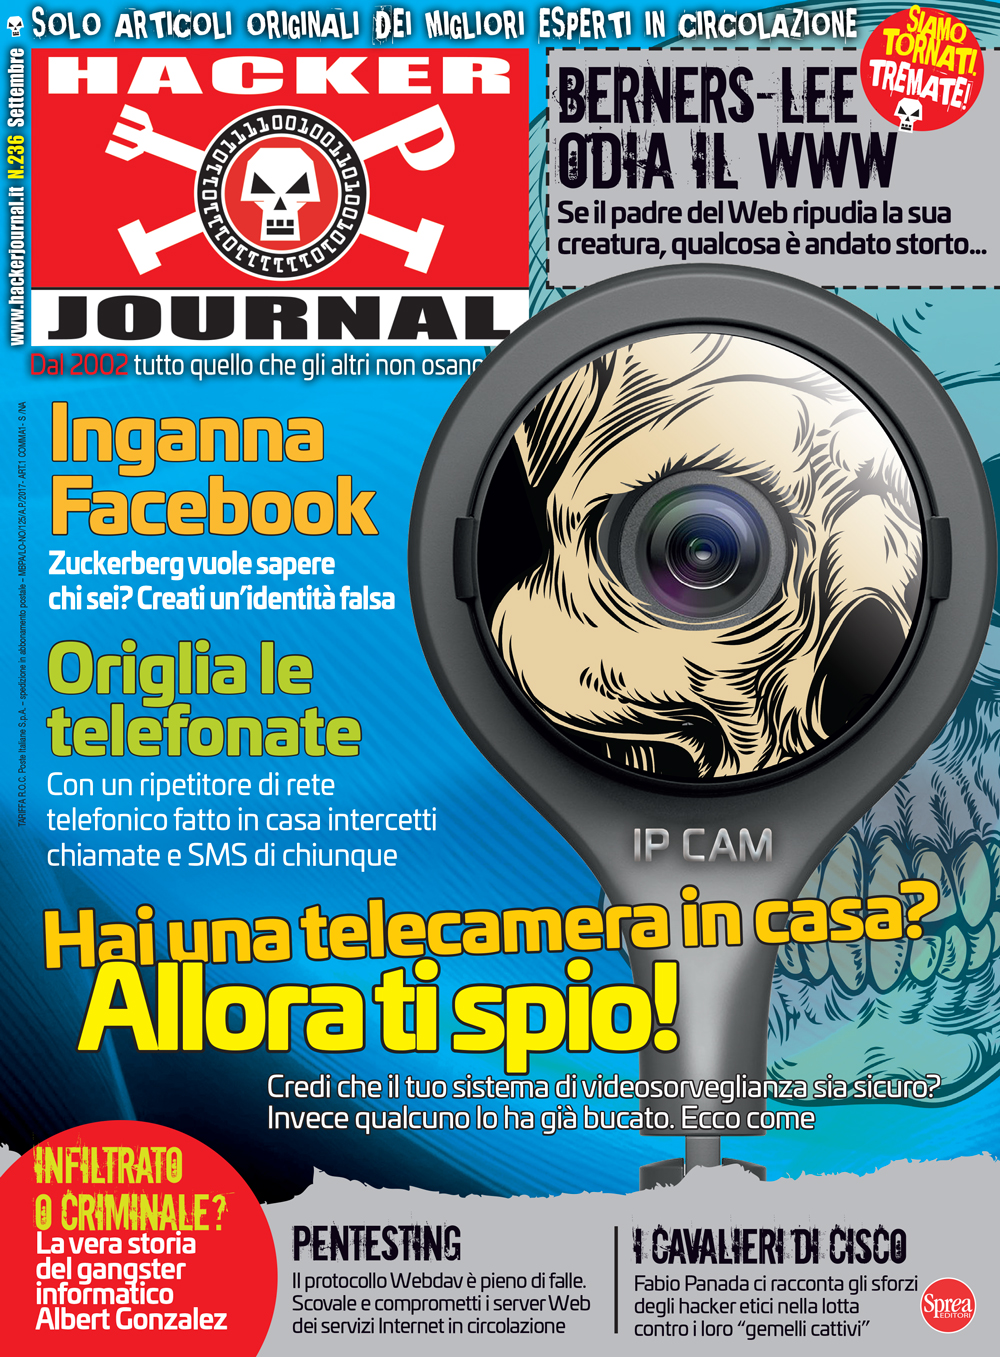 Cover Hacker Journal 236